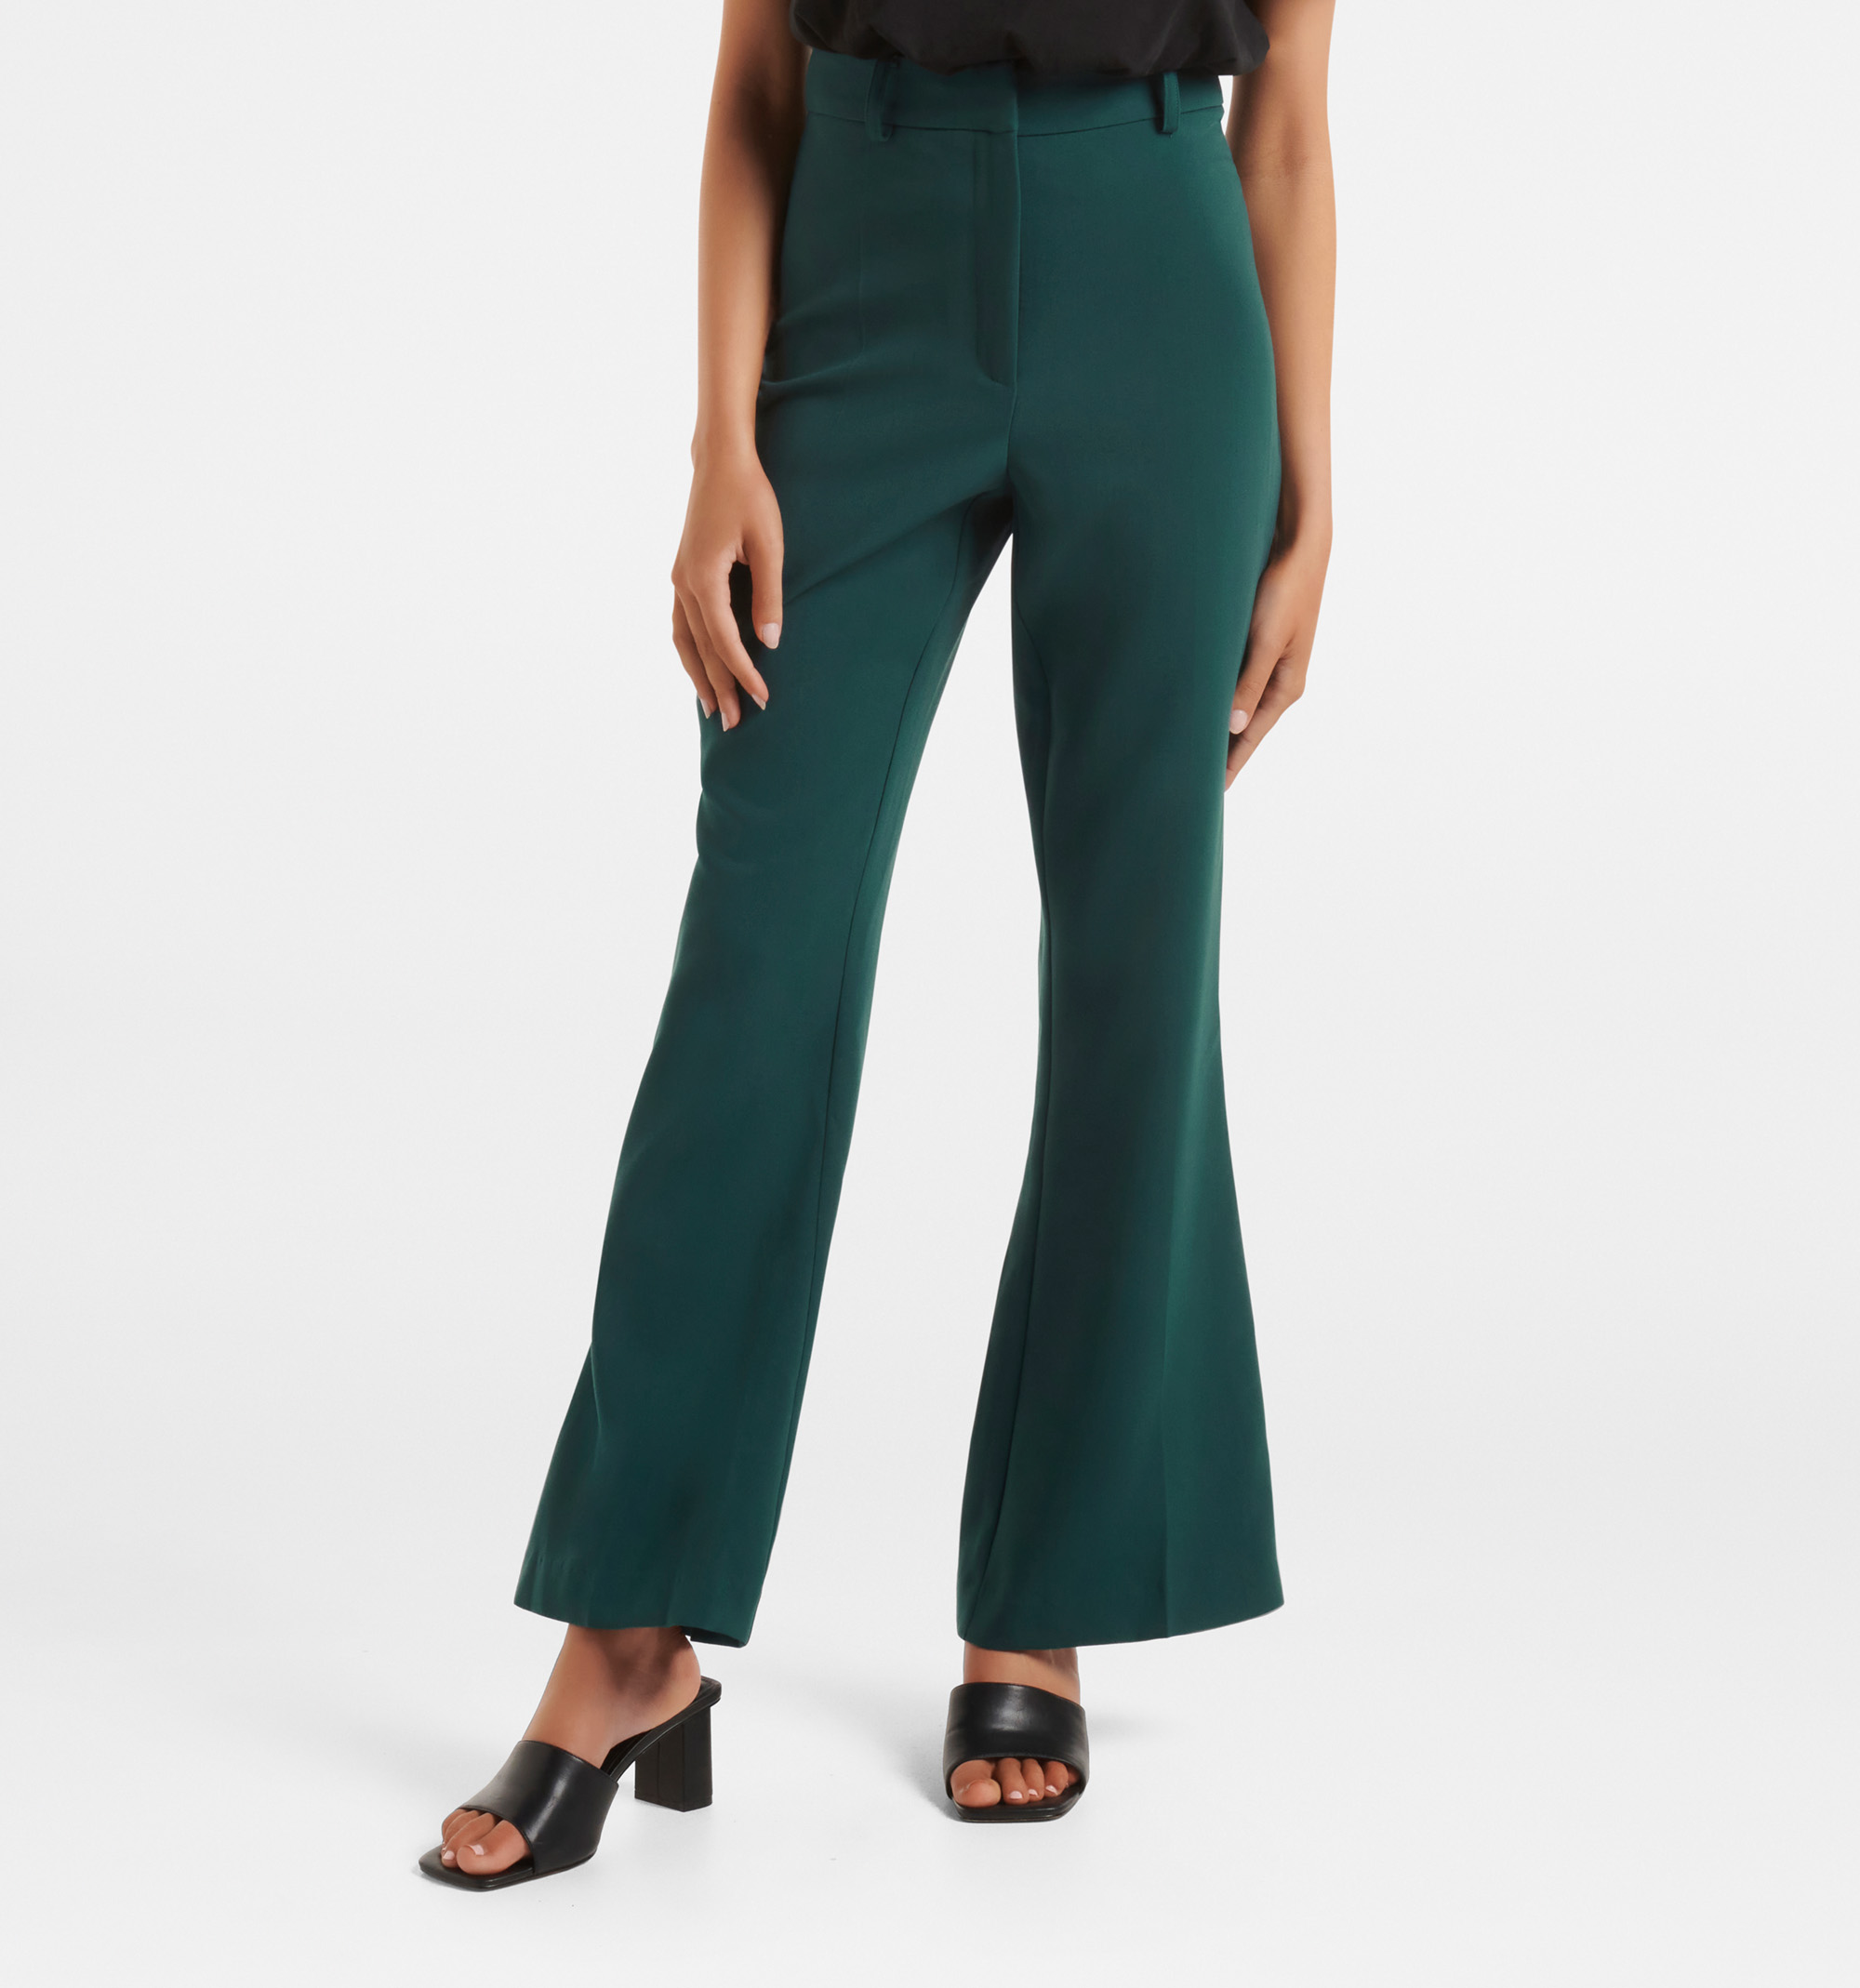 Buy Dark Green Florence Flare Pants Online - Forever New